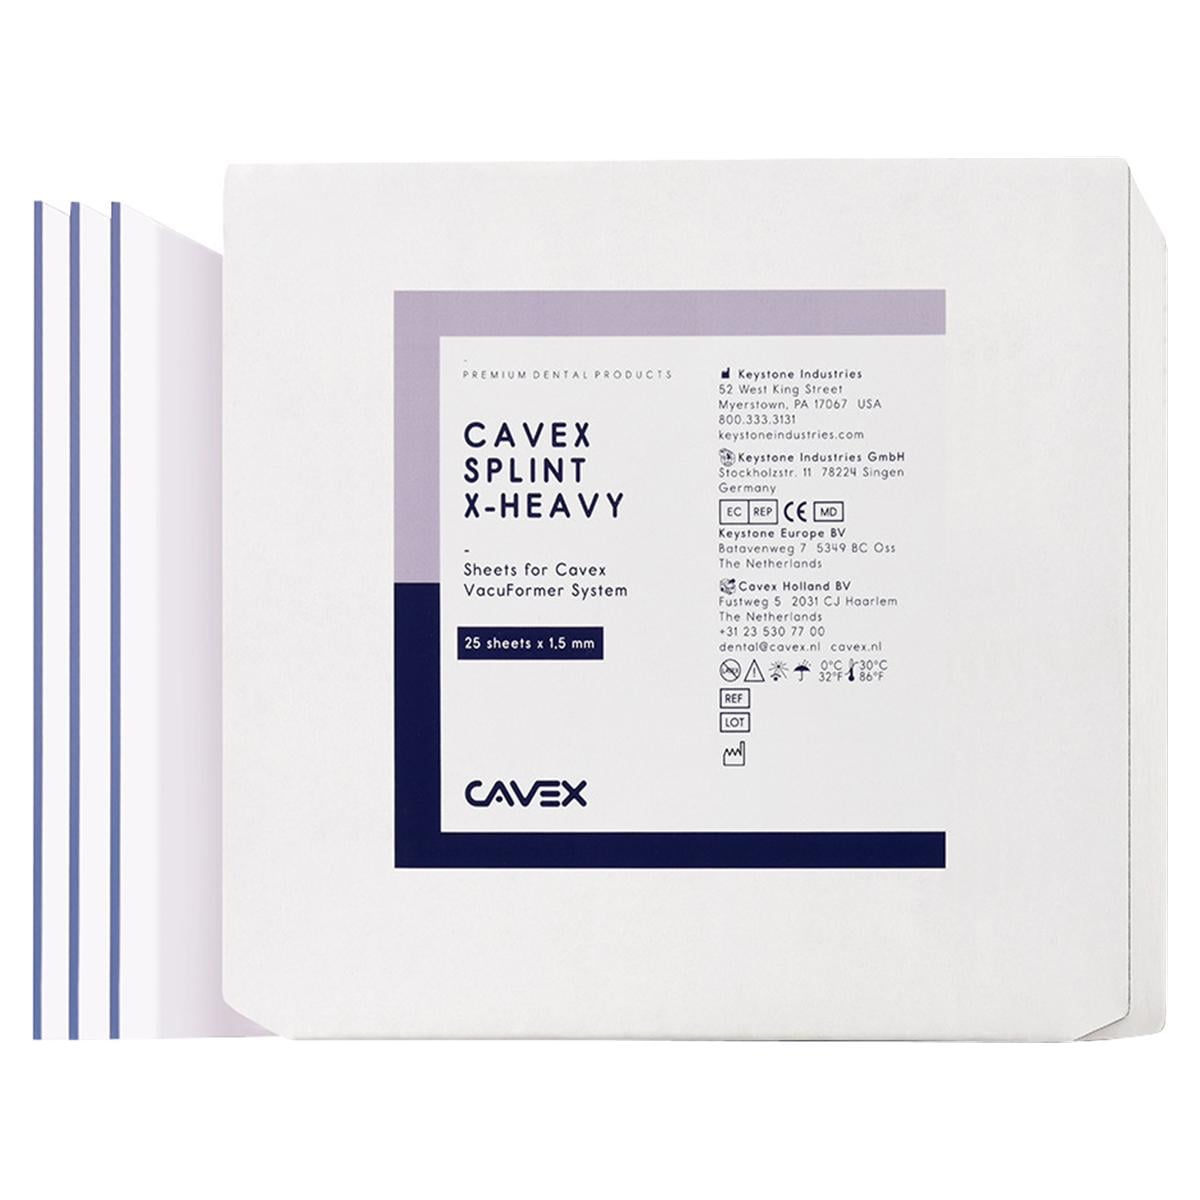 Cavex Splint X-heavy, 125 x 125 mm (eckig) - Stärke 1,5 mm, Packung 25 Stück